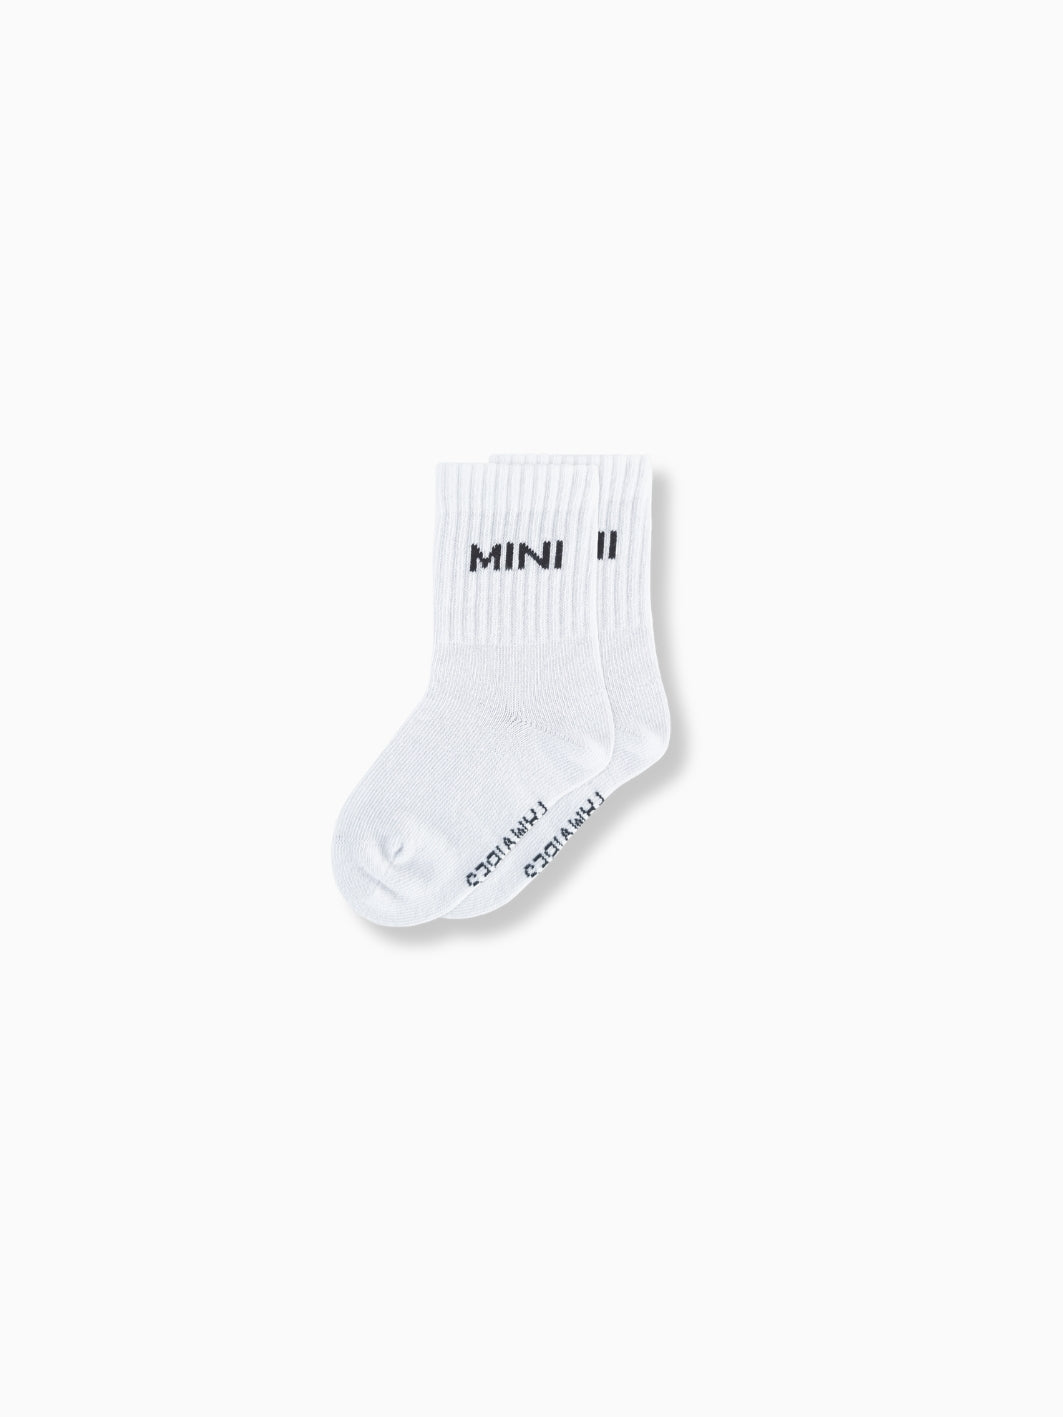 MINI - Socken weiß - FAMVIBES 